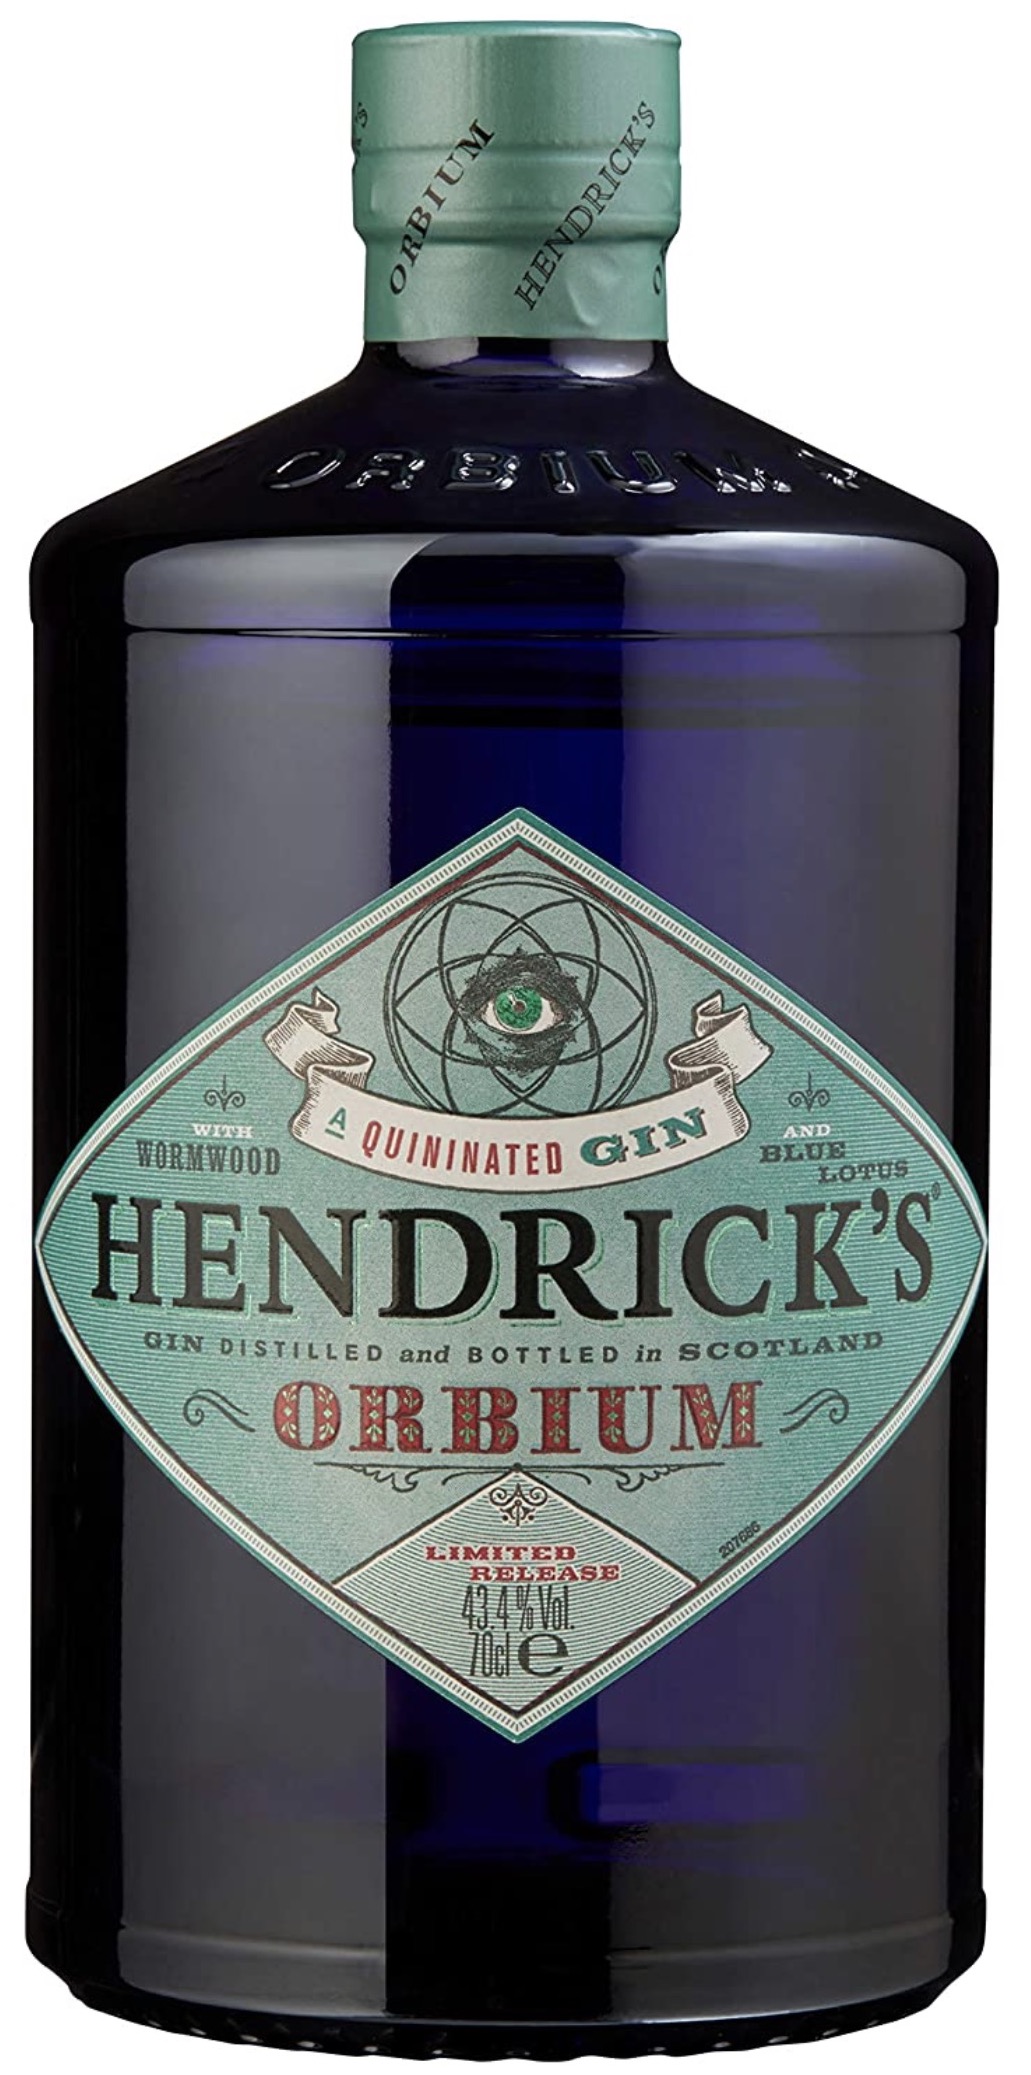 Hendricks Gin Orbium Quininated Gin 43,4% vol. 0,7L